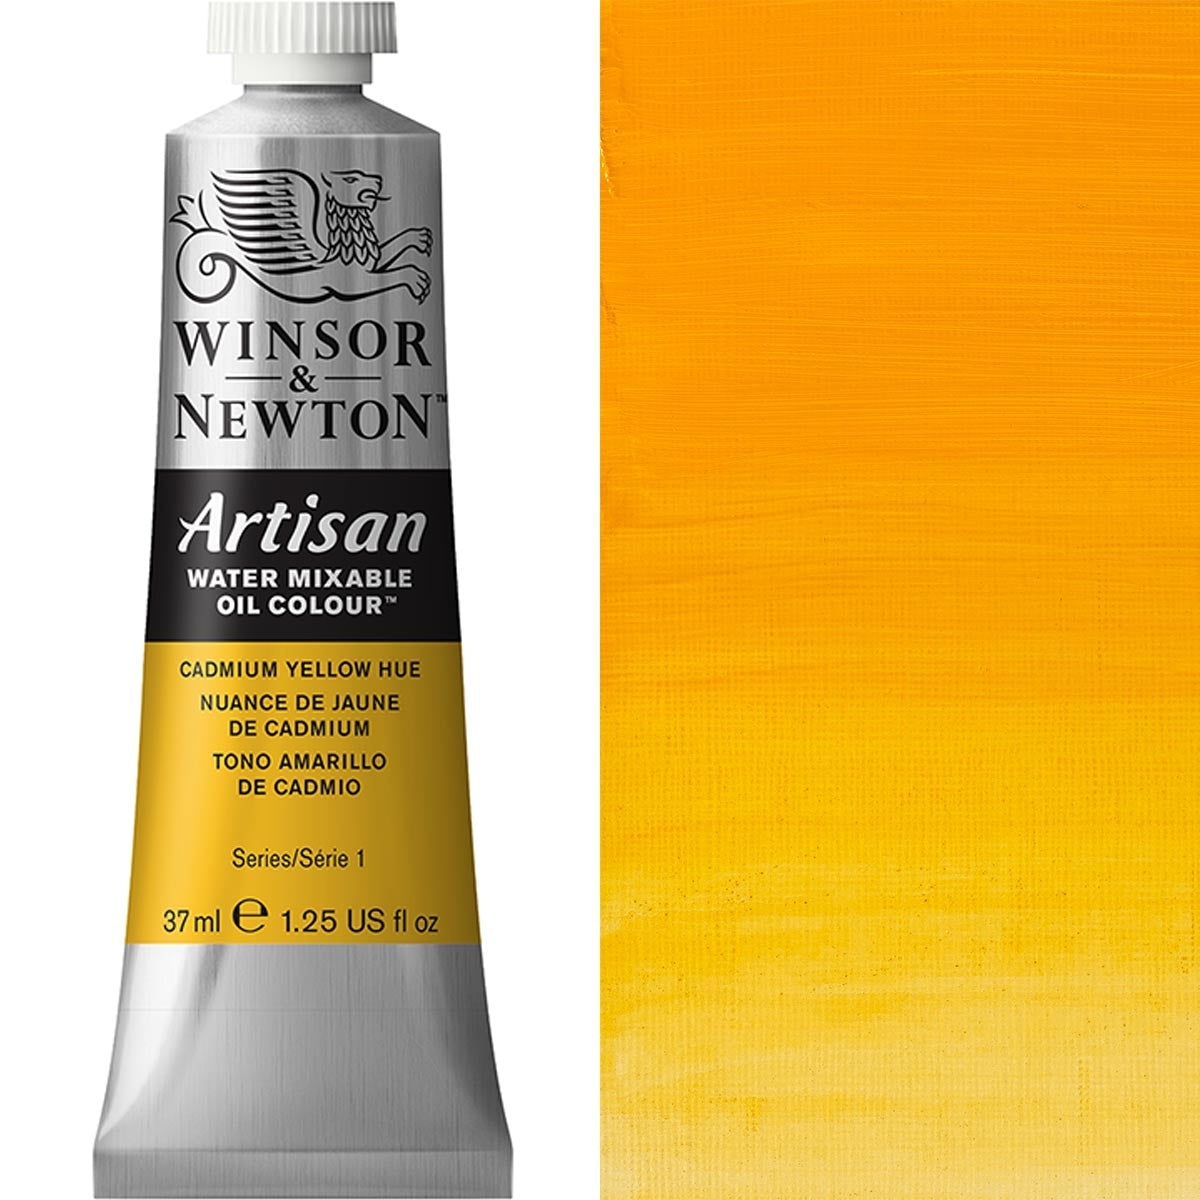 Winsor and Newton - Artisan Oil Colour Watermixable - 37ml - Cadmium Yellow Hue